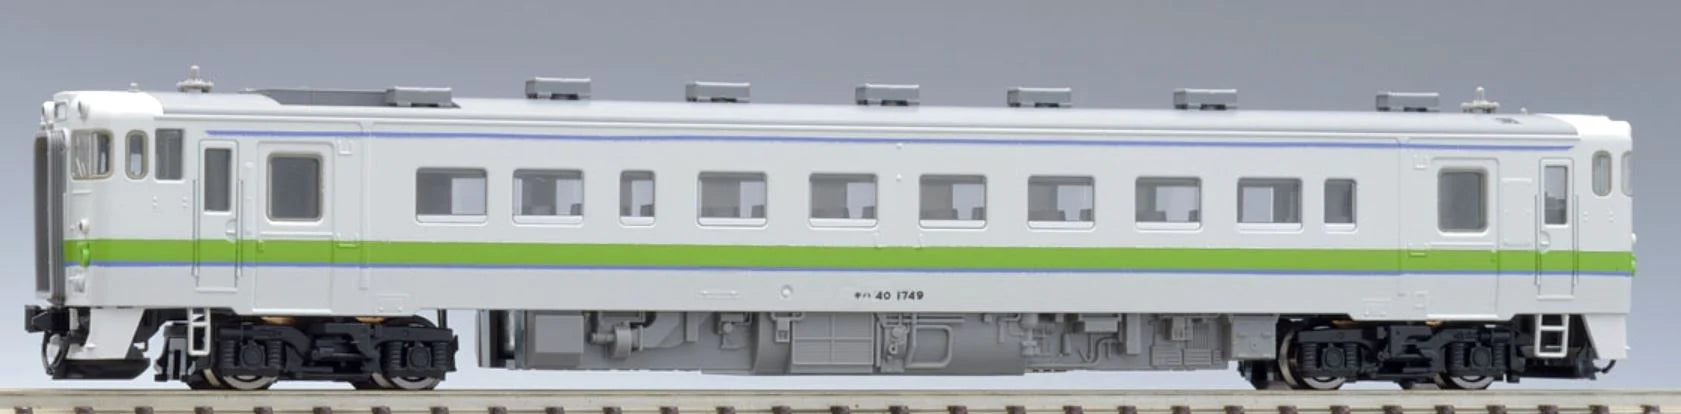 Tomix 08453 8453 N DMU Railbus Class KIHA 40-1700, Grey, Ep IV, Hokkaido Railway Company